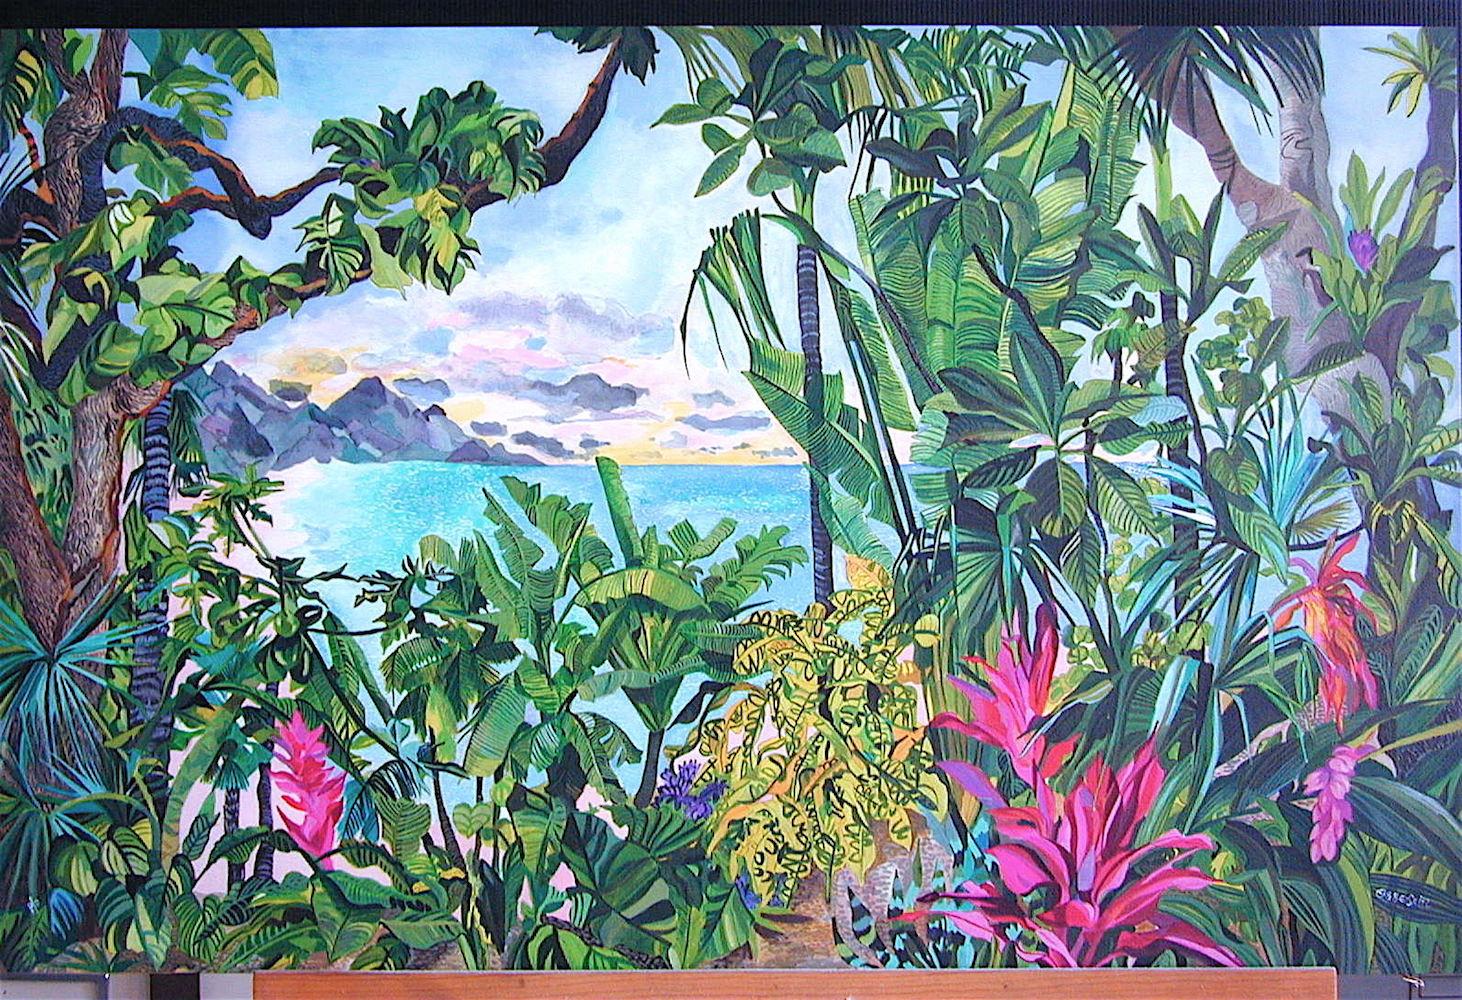 BEYOND EARTHS BEAUTY Signed Lithograph, Island Landscape, Tropical Plants, Beach - Blue Landscape Print by Eileen Seitz